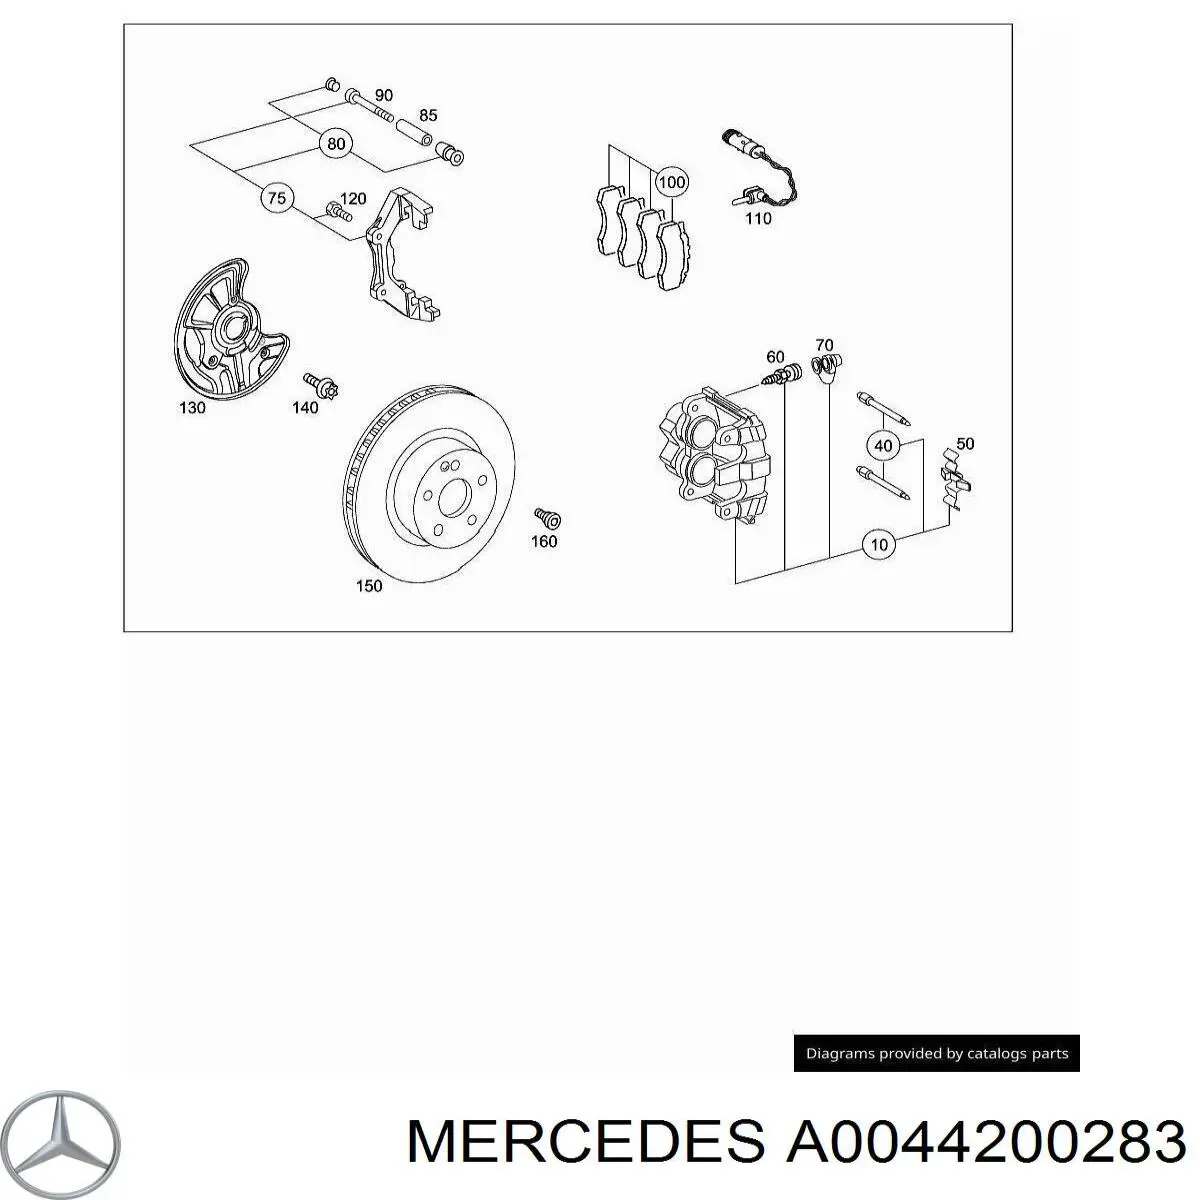 0044200283 Mercedes pinza de freno delantera derecha